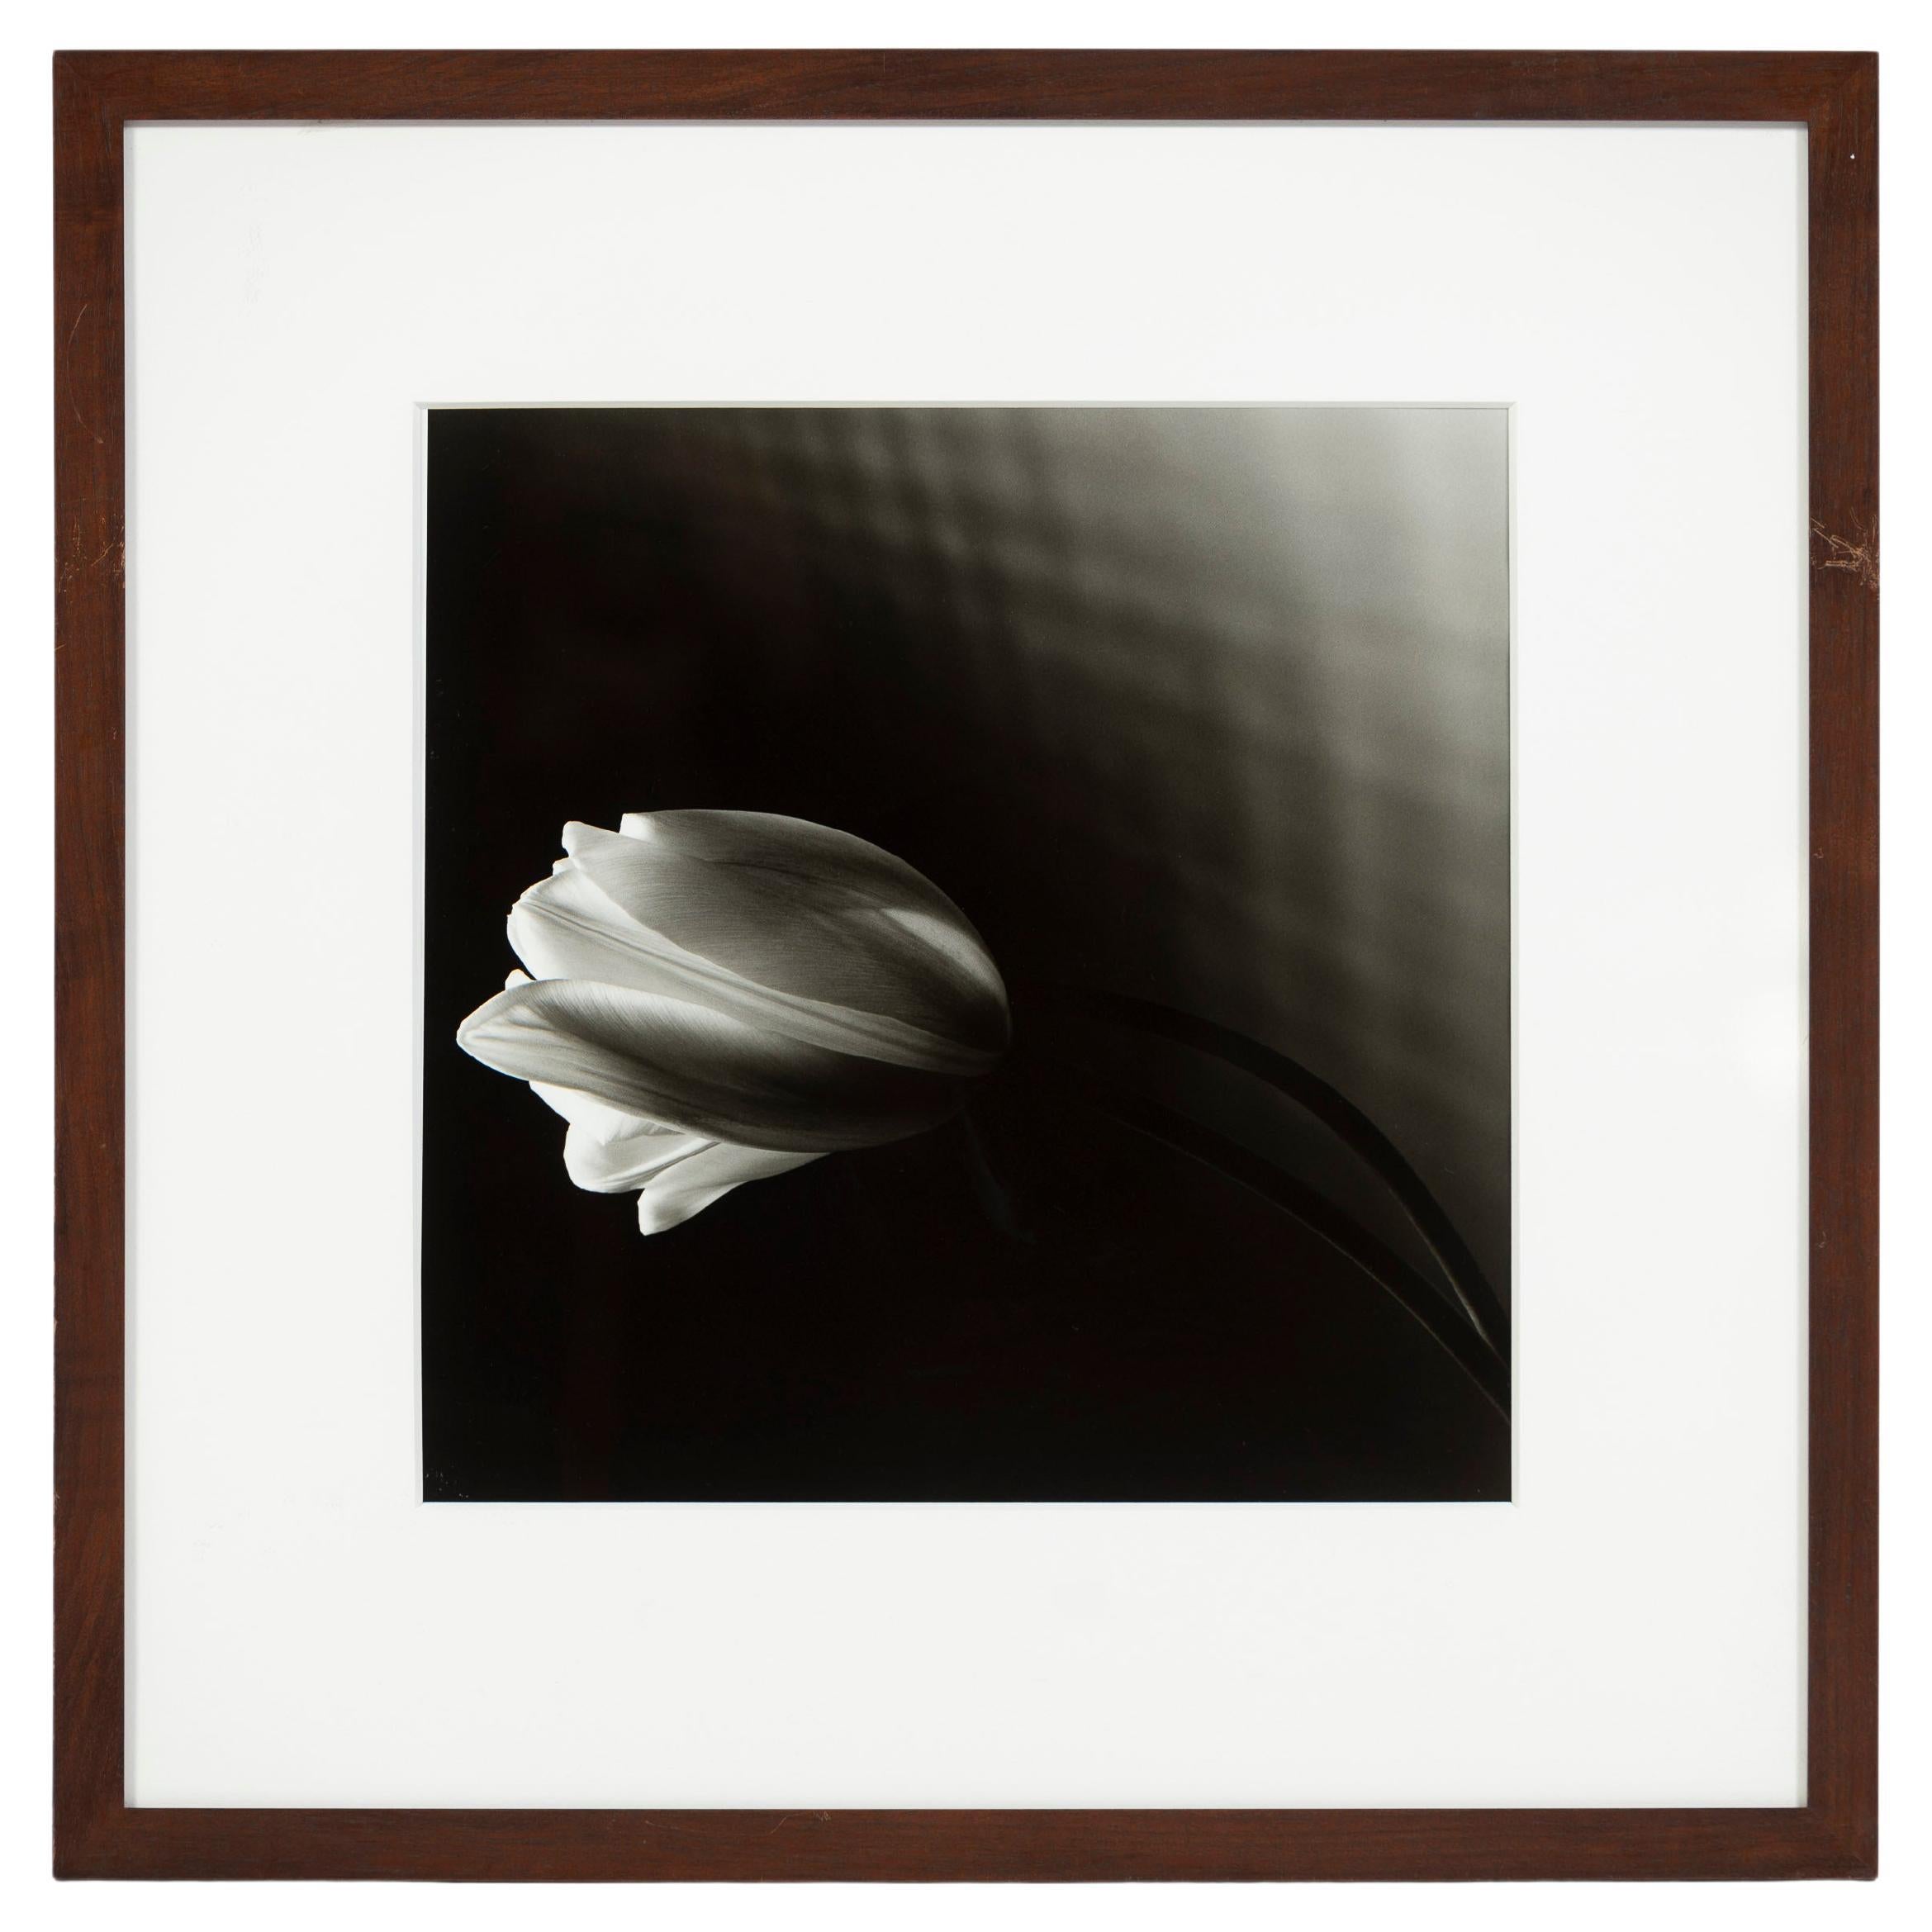 "Tulip, Black and White Photo, Framed, Greg Bruce, 1997, USA